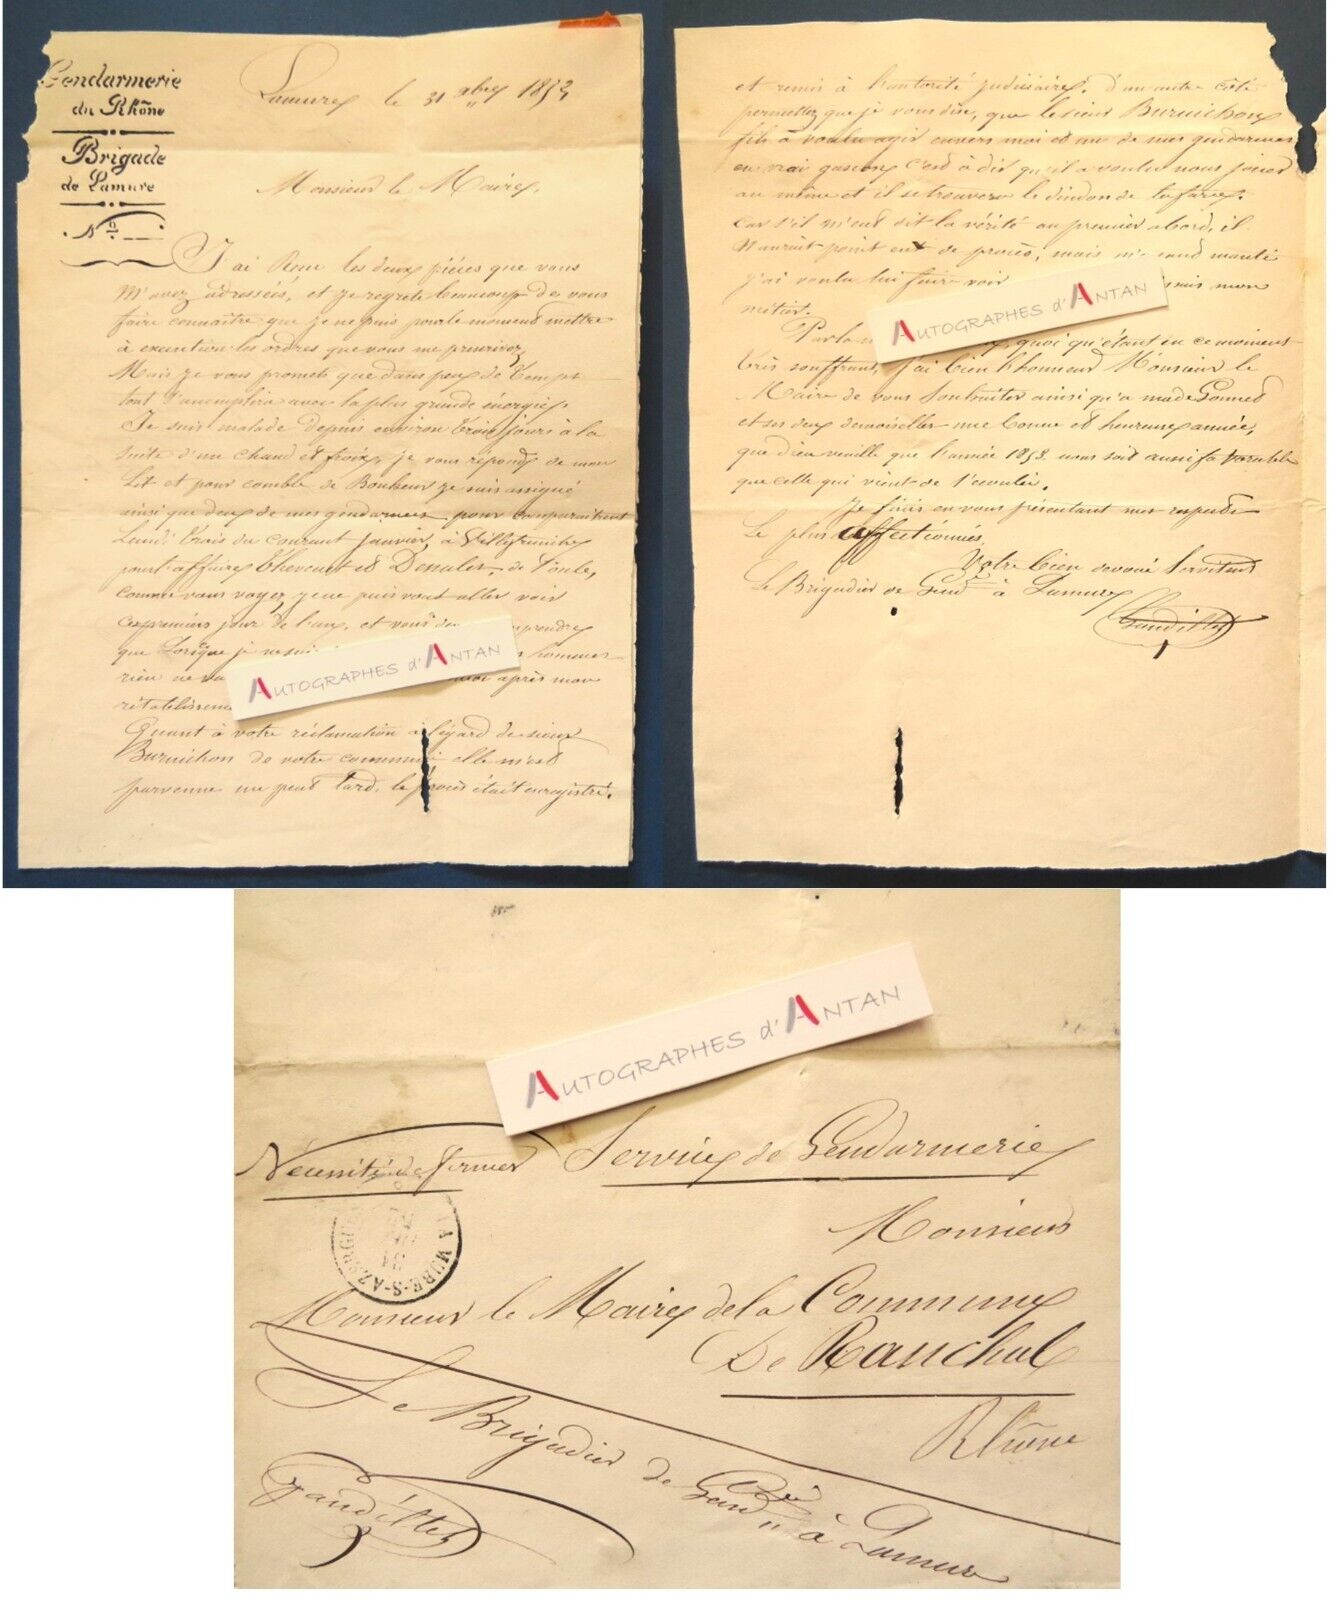 ● Gendarmerie / Brigade de LAMURES (on Azergues) 1852 - Rhône - Letter to the Mayor